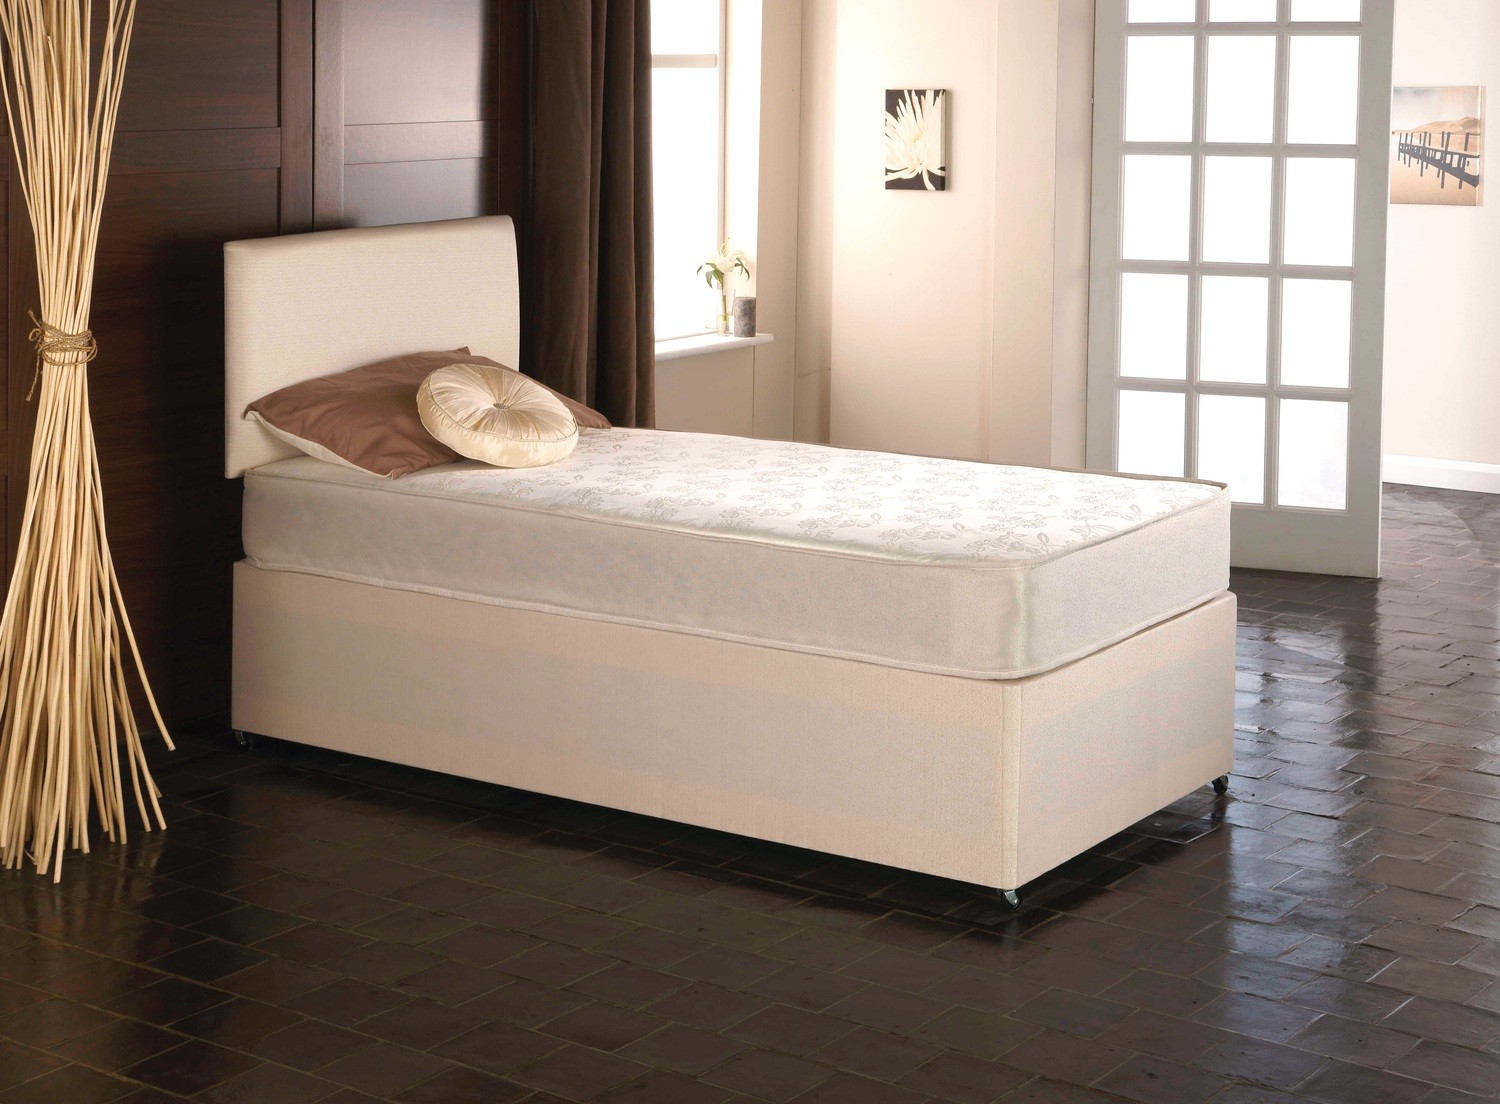 mattress same as hilton bed